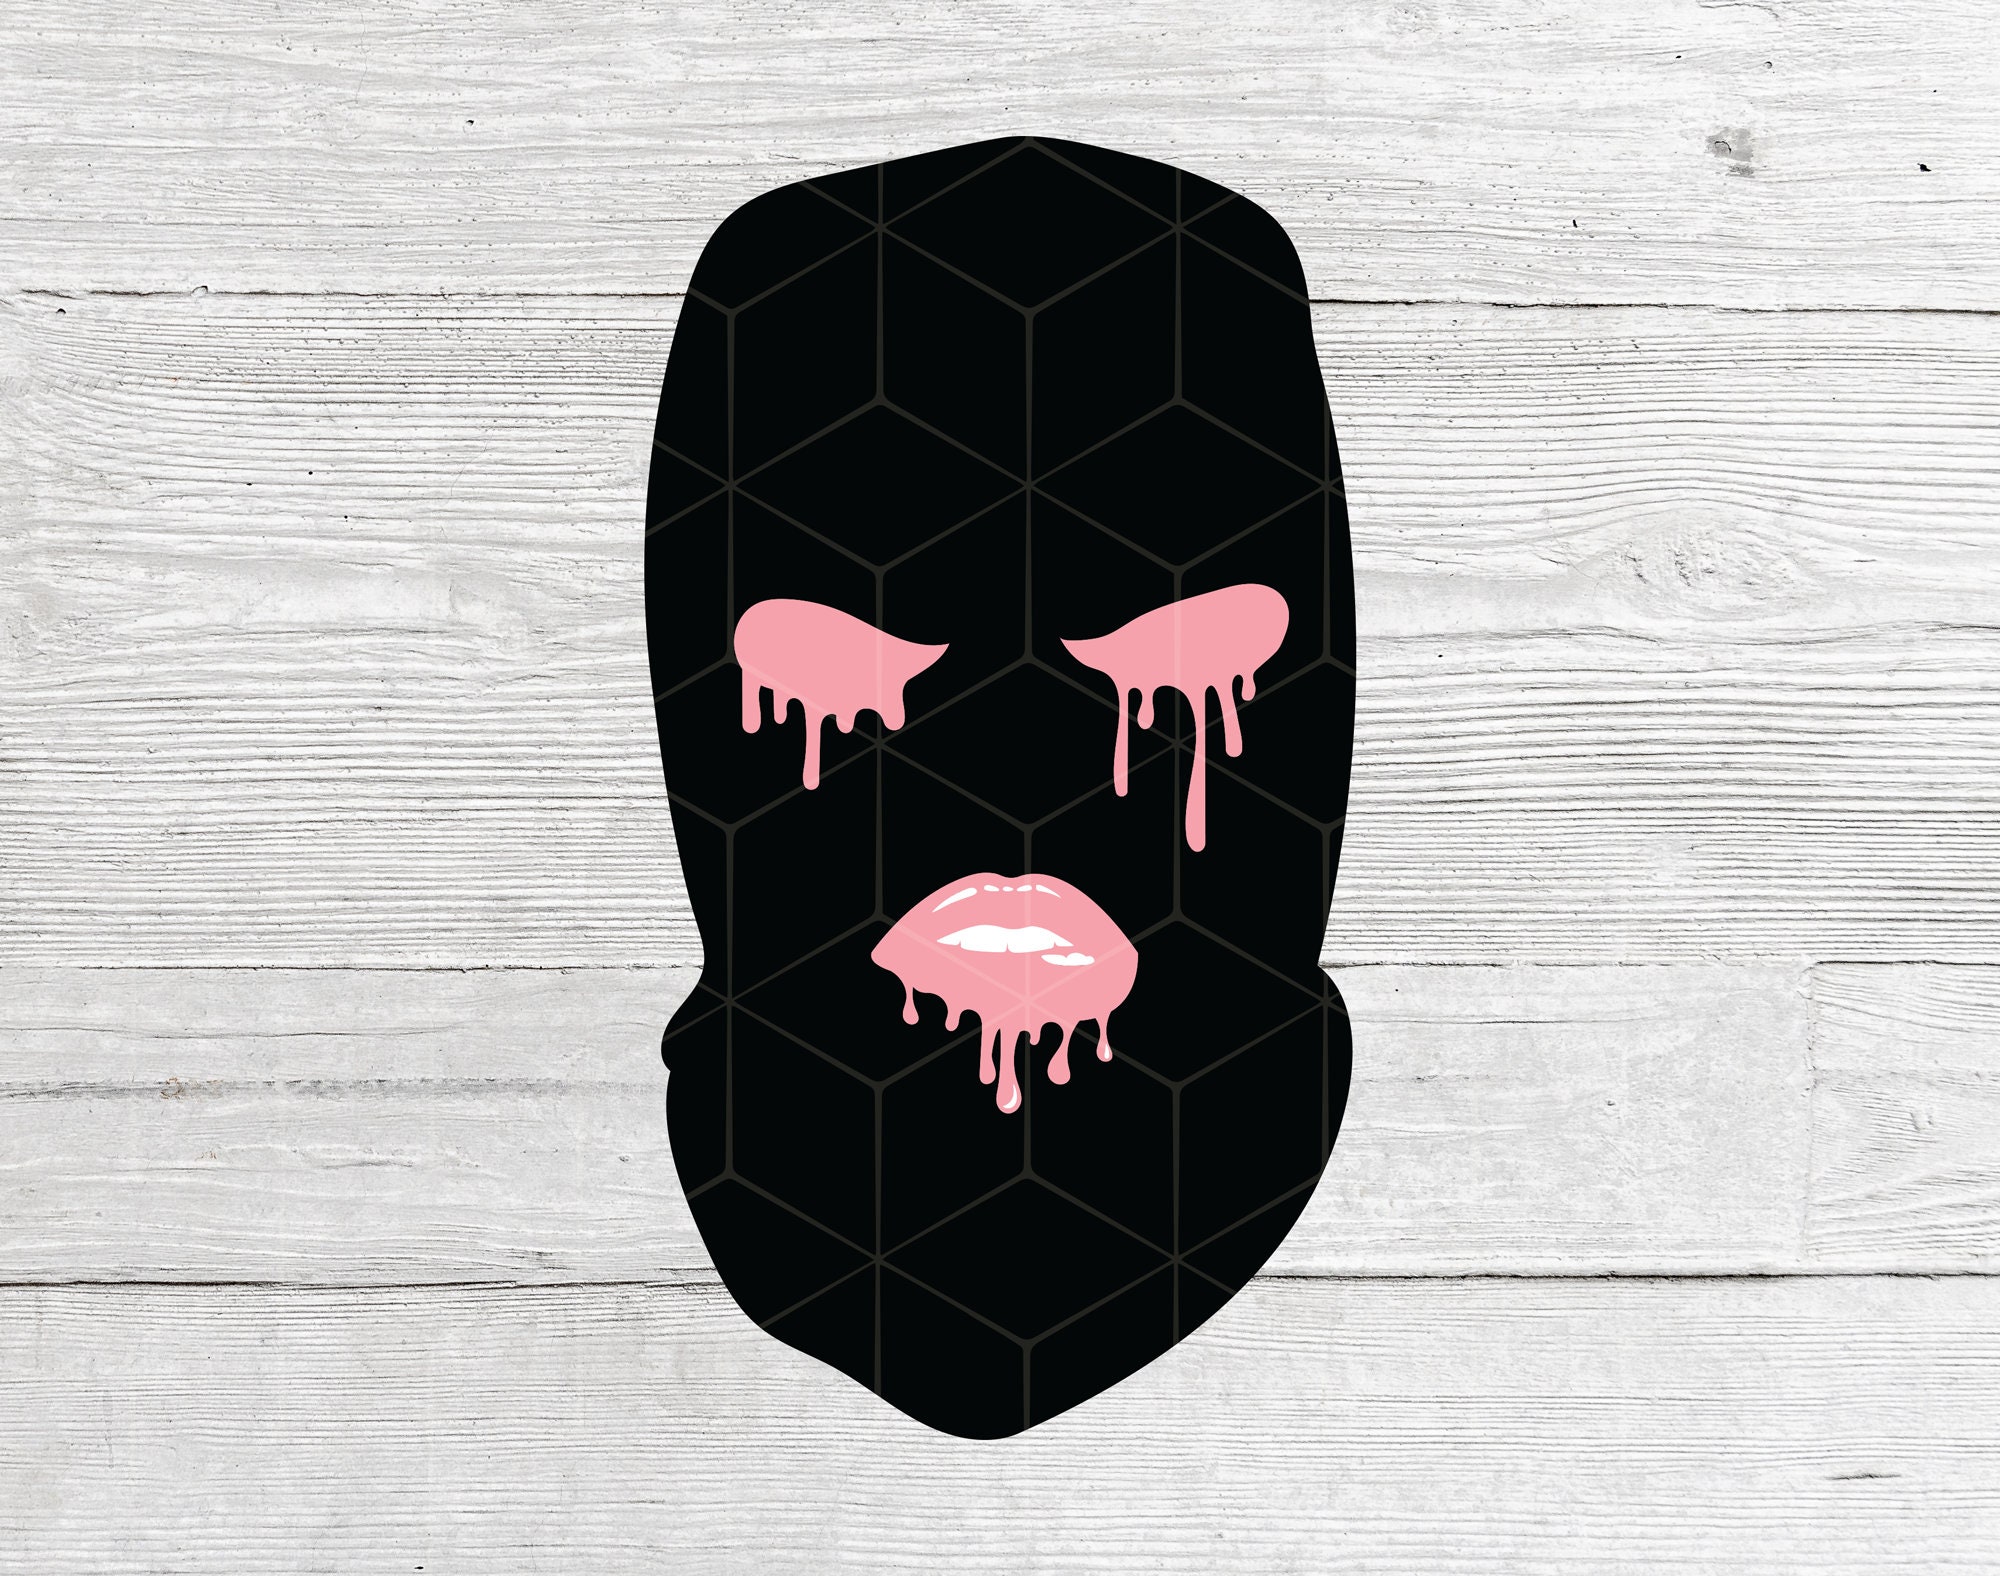 Ski Mask Pink UZI Pistol Broken Heart Embroidered Pink Cool 